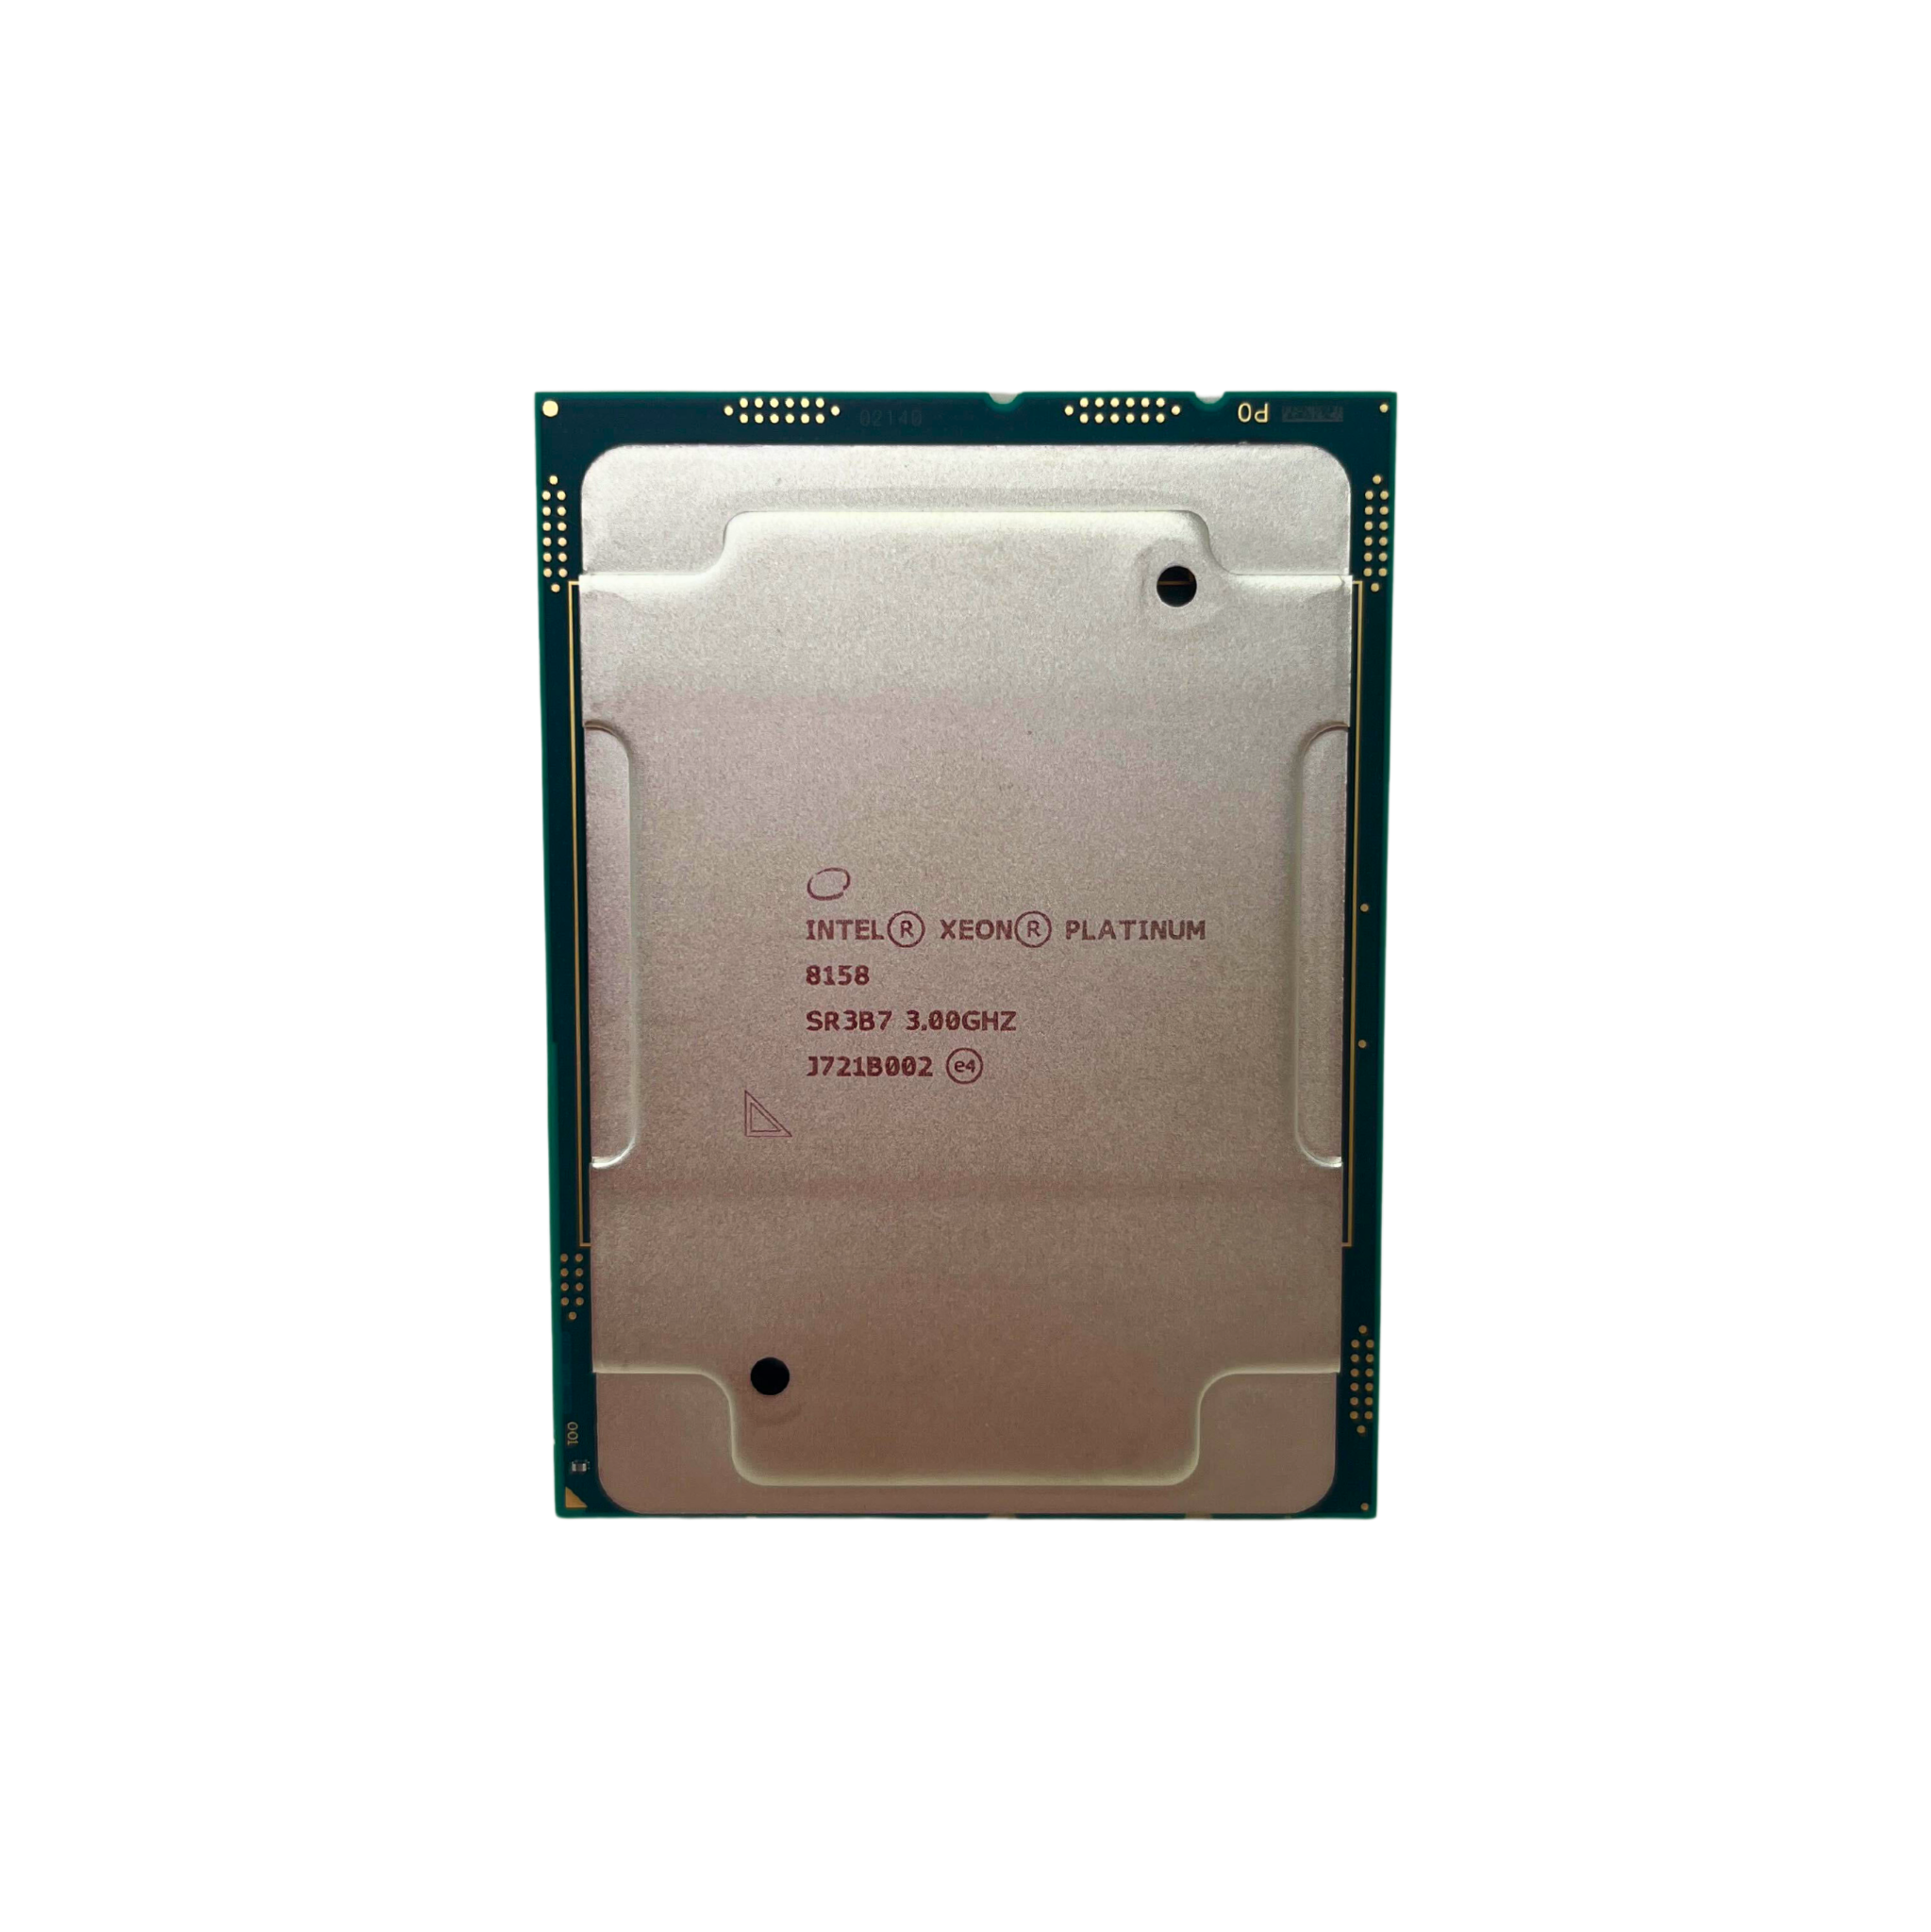 Cisco Intel  Xeon  PLATINUM 8158 12 CORE 3.00GHZ 24.75MB L3 CACHE TDP 150W FCLGA3647 Processor (UCS-CPU-8158-WS)